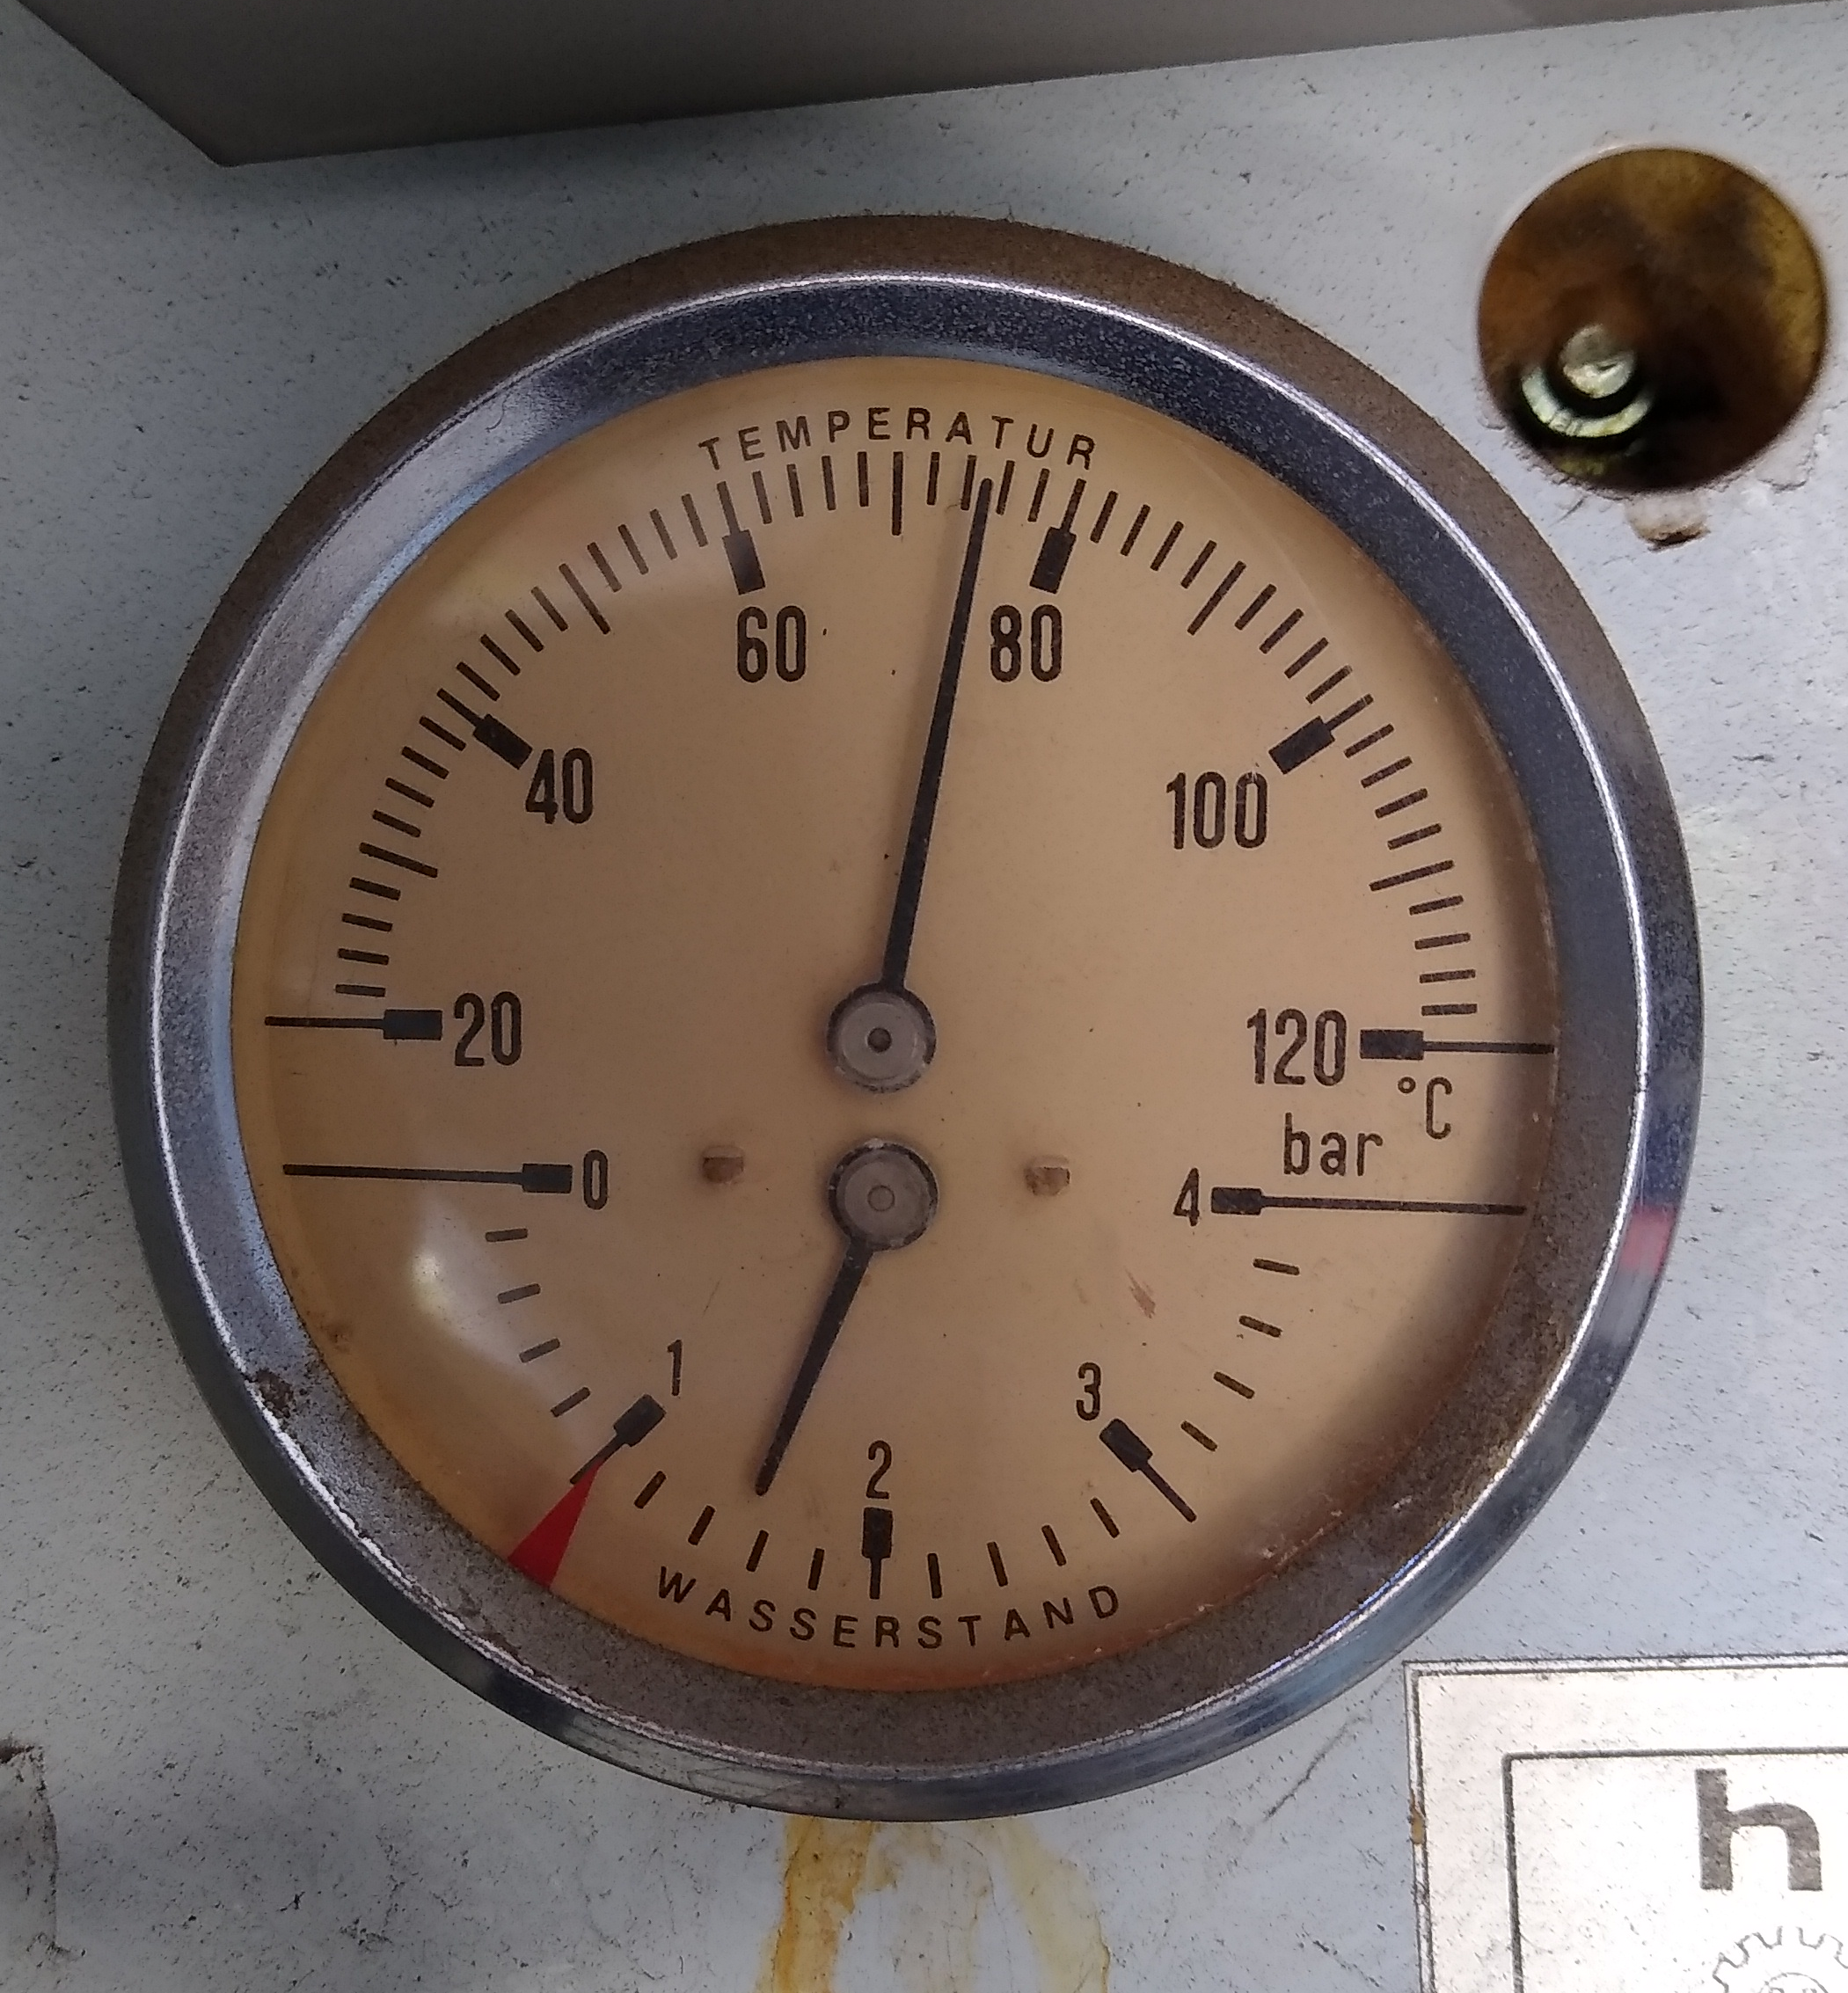 heater temperature and pressure meters